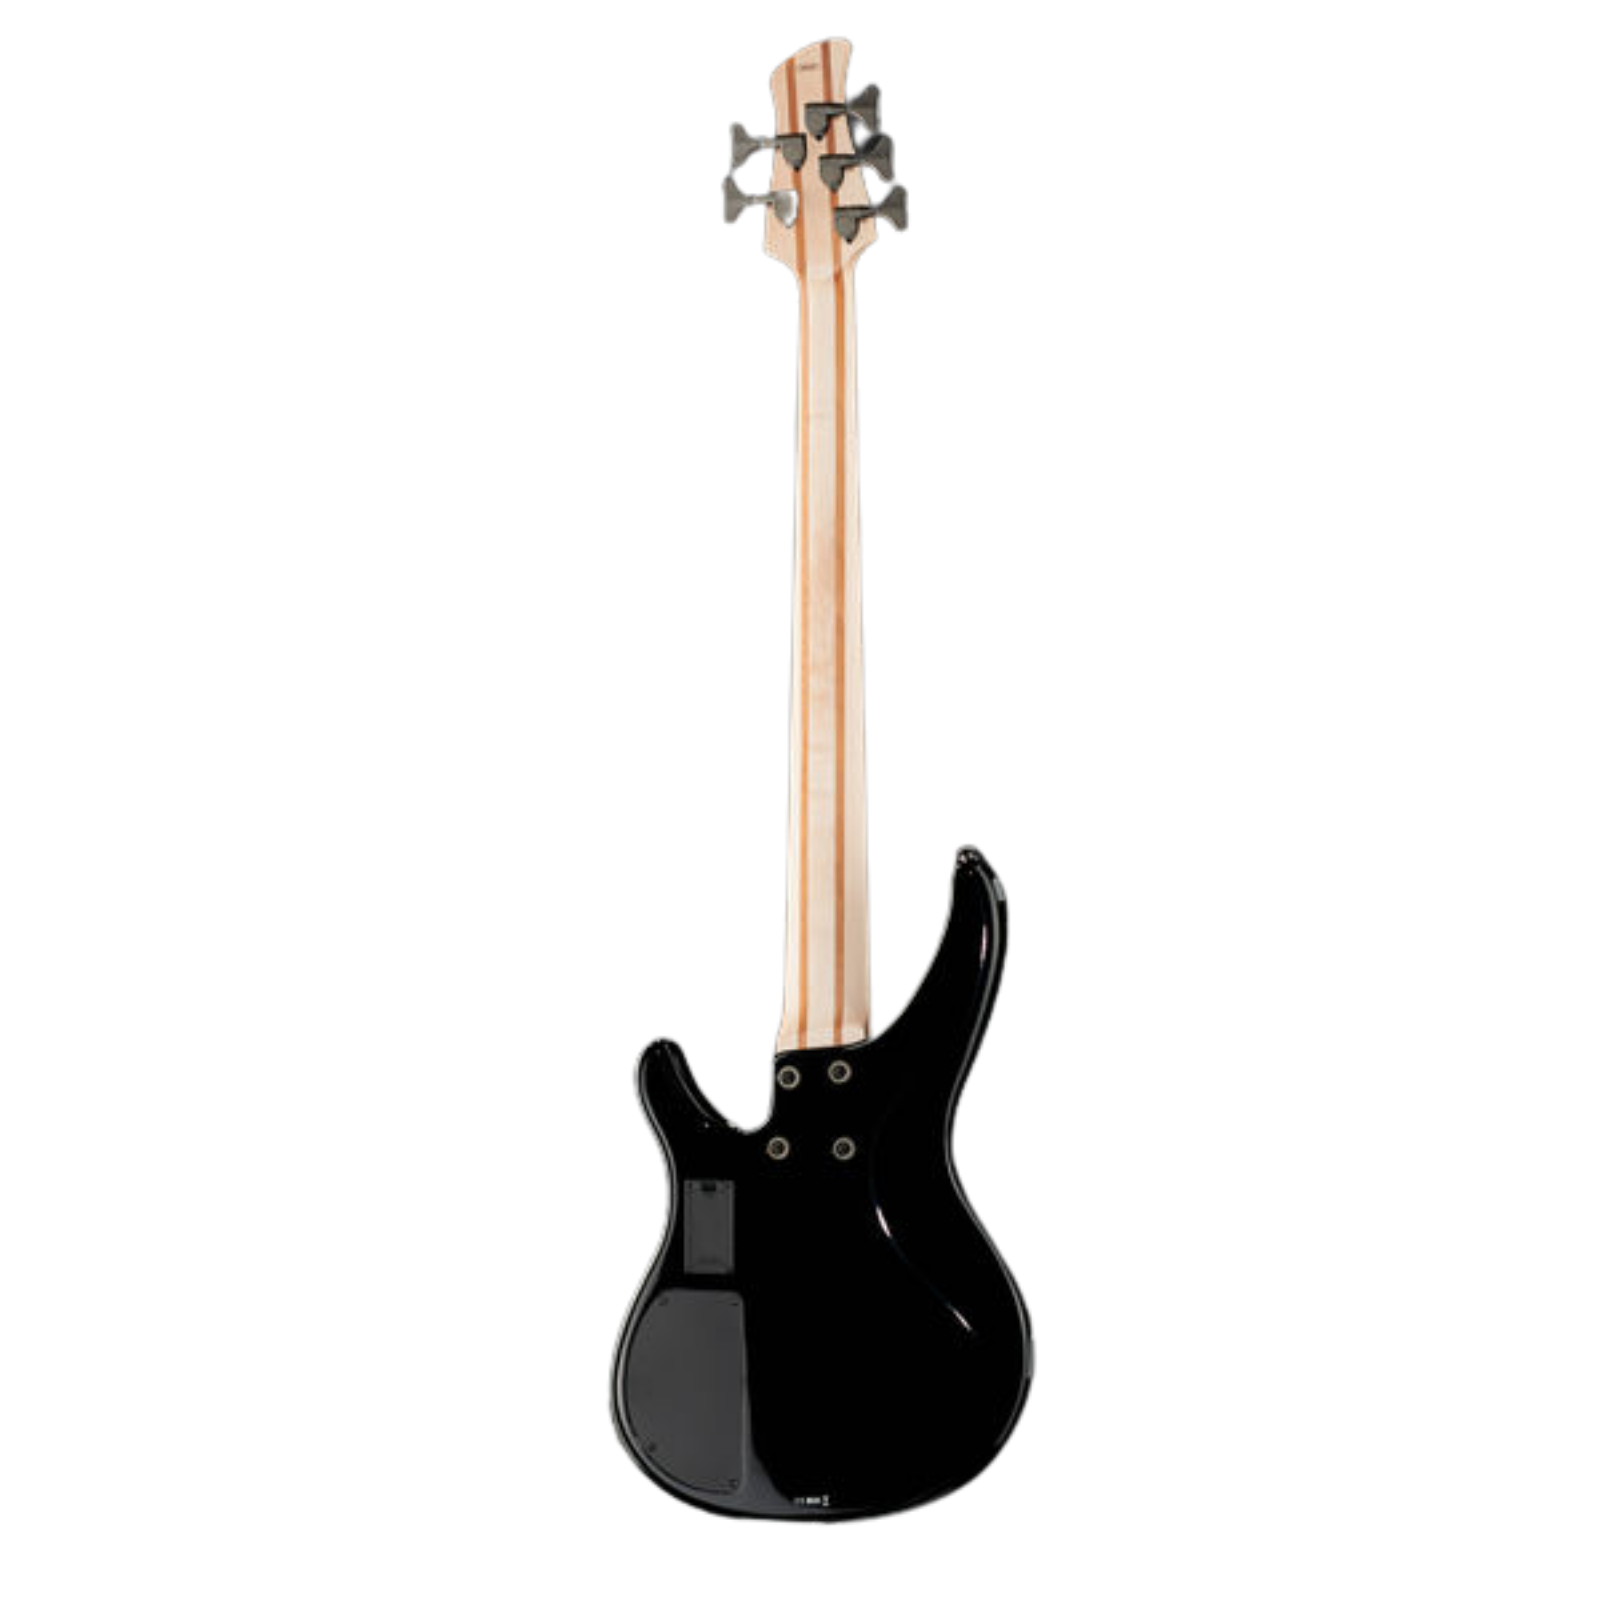 Yamaha TRBX305 5-string Electric Bass Guitar - Black (TRBX 305/TRBX-305), YAMAHA, BASS GUITAR, yamaha-bass-guitar-ymhgtrbx305-bk, ZOSO MUSIC SDN BHD